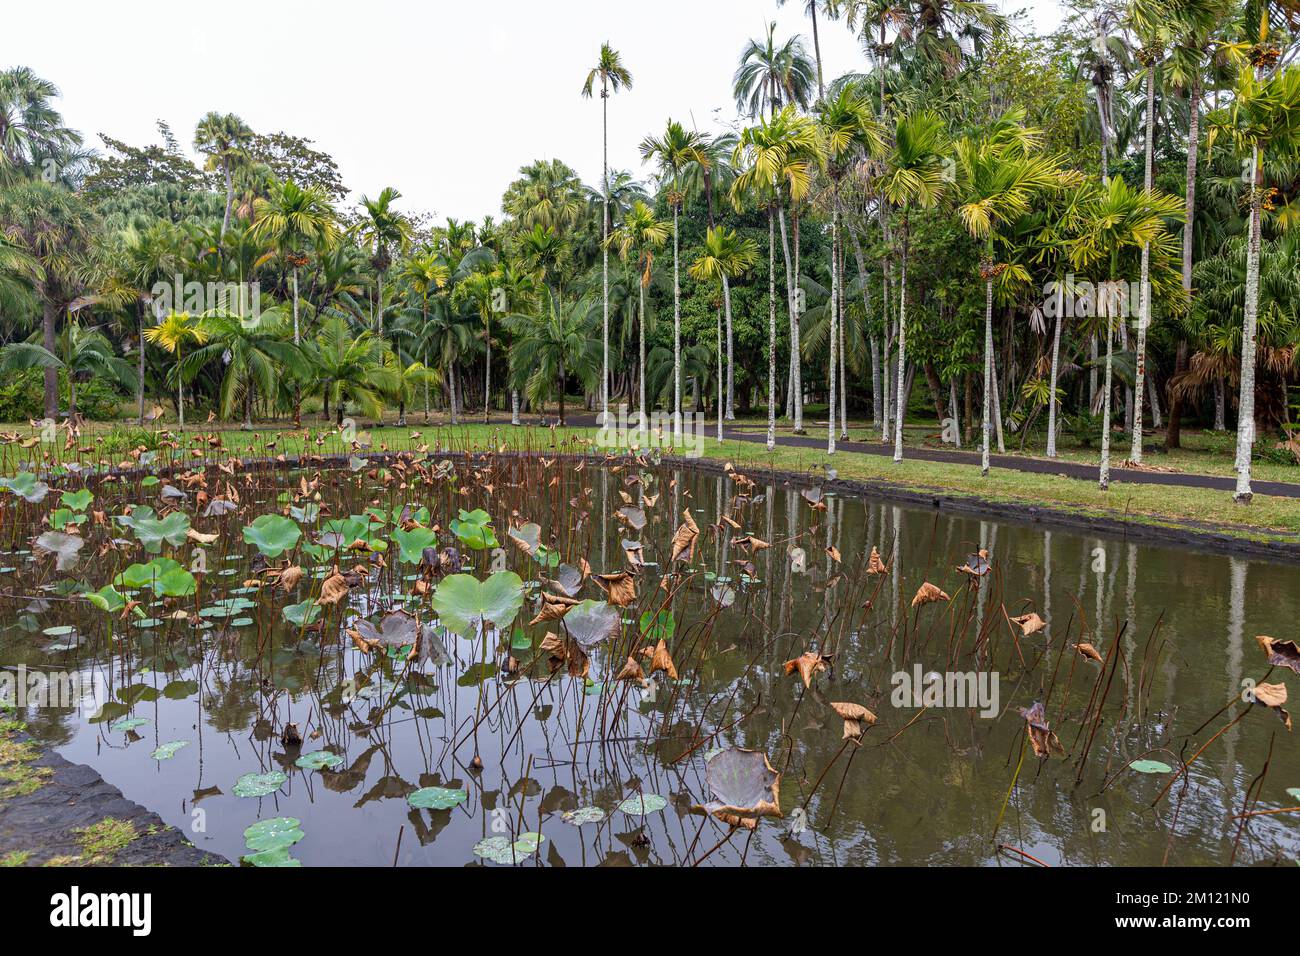 Sir Seewoosagur Ramgoolam Botanical Garden, étang avec Victoria Amazonica Giant Water Lilies, Ile Maurice, Afrique Banque D'Images